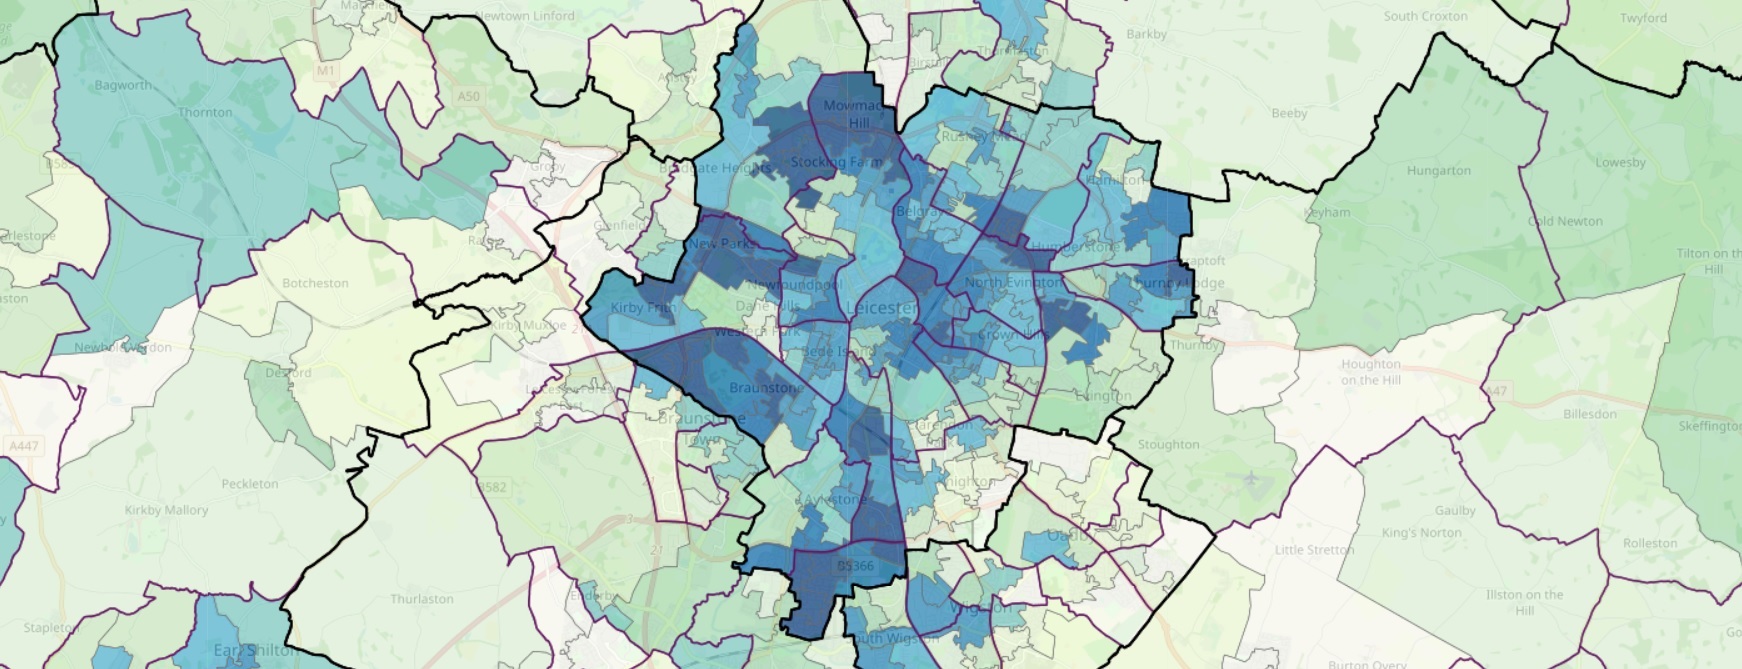 East Midlands Data